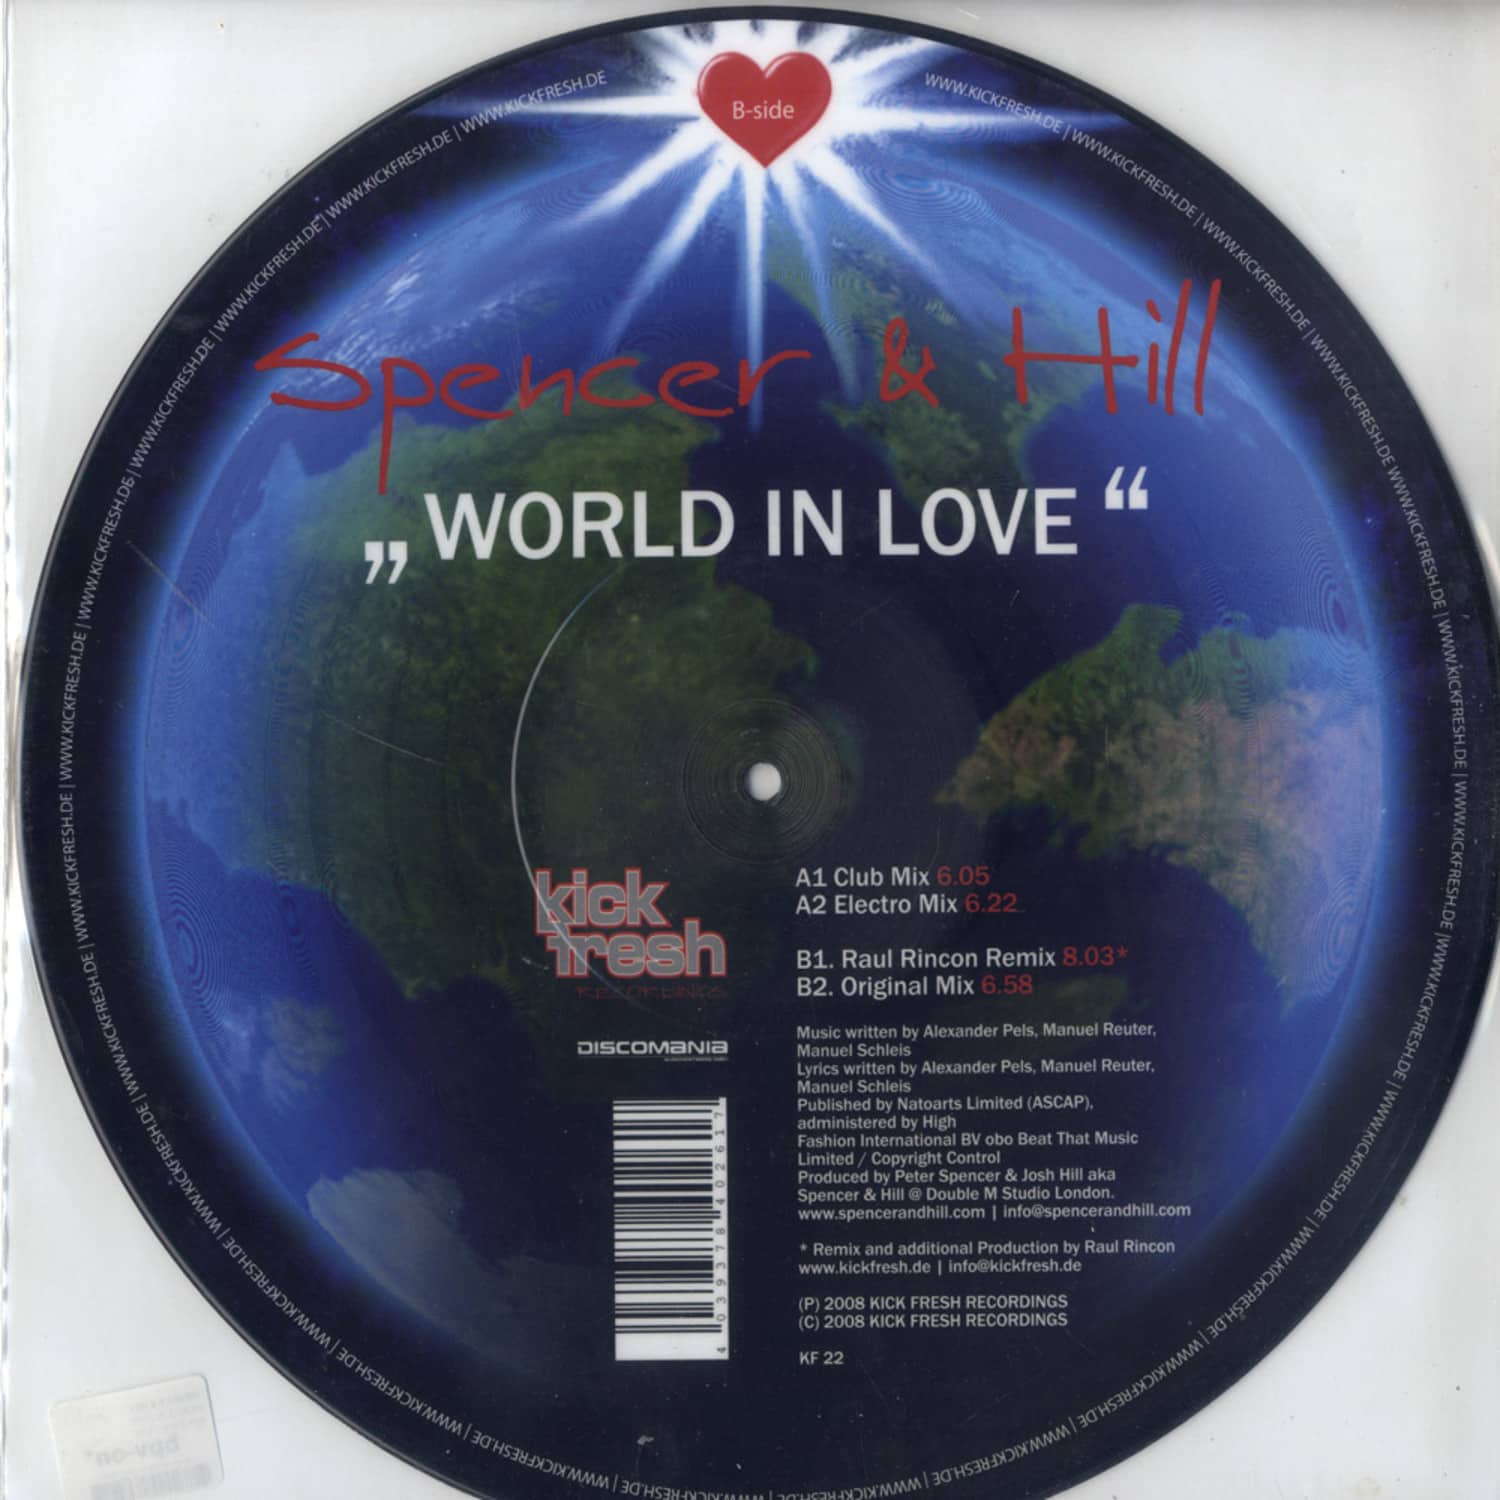 Spencer & Hill - WORLD IN LOVE